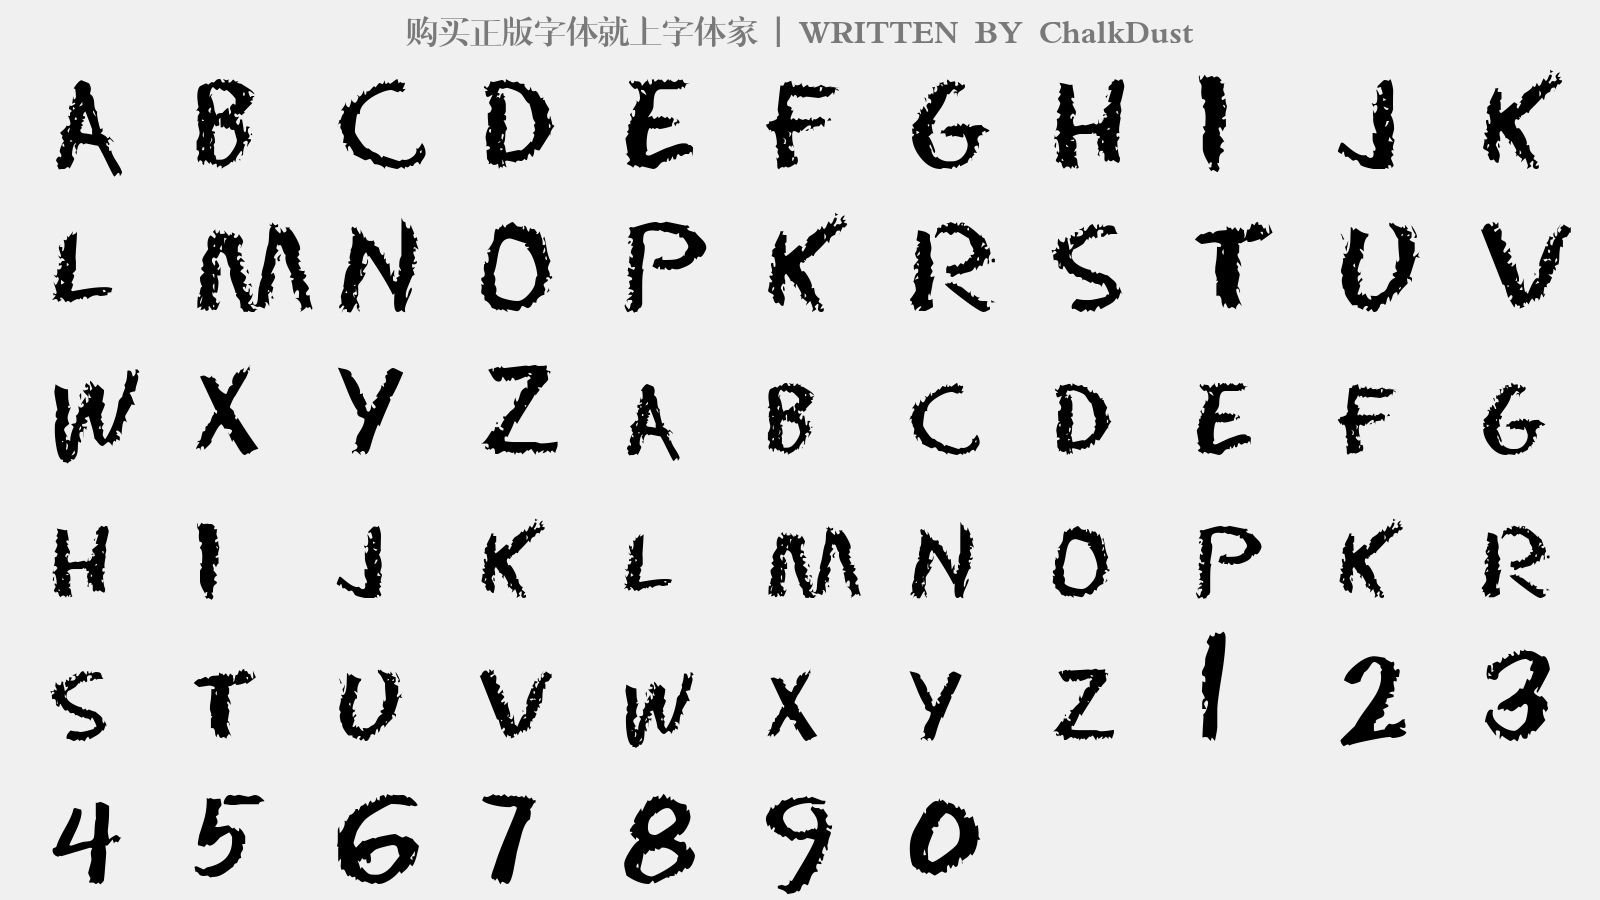 ChalkDust - 大写字母/小写字母/数字